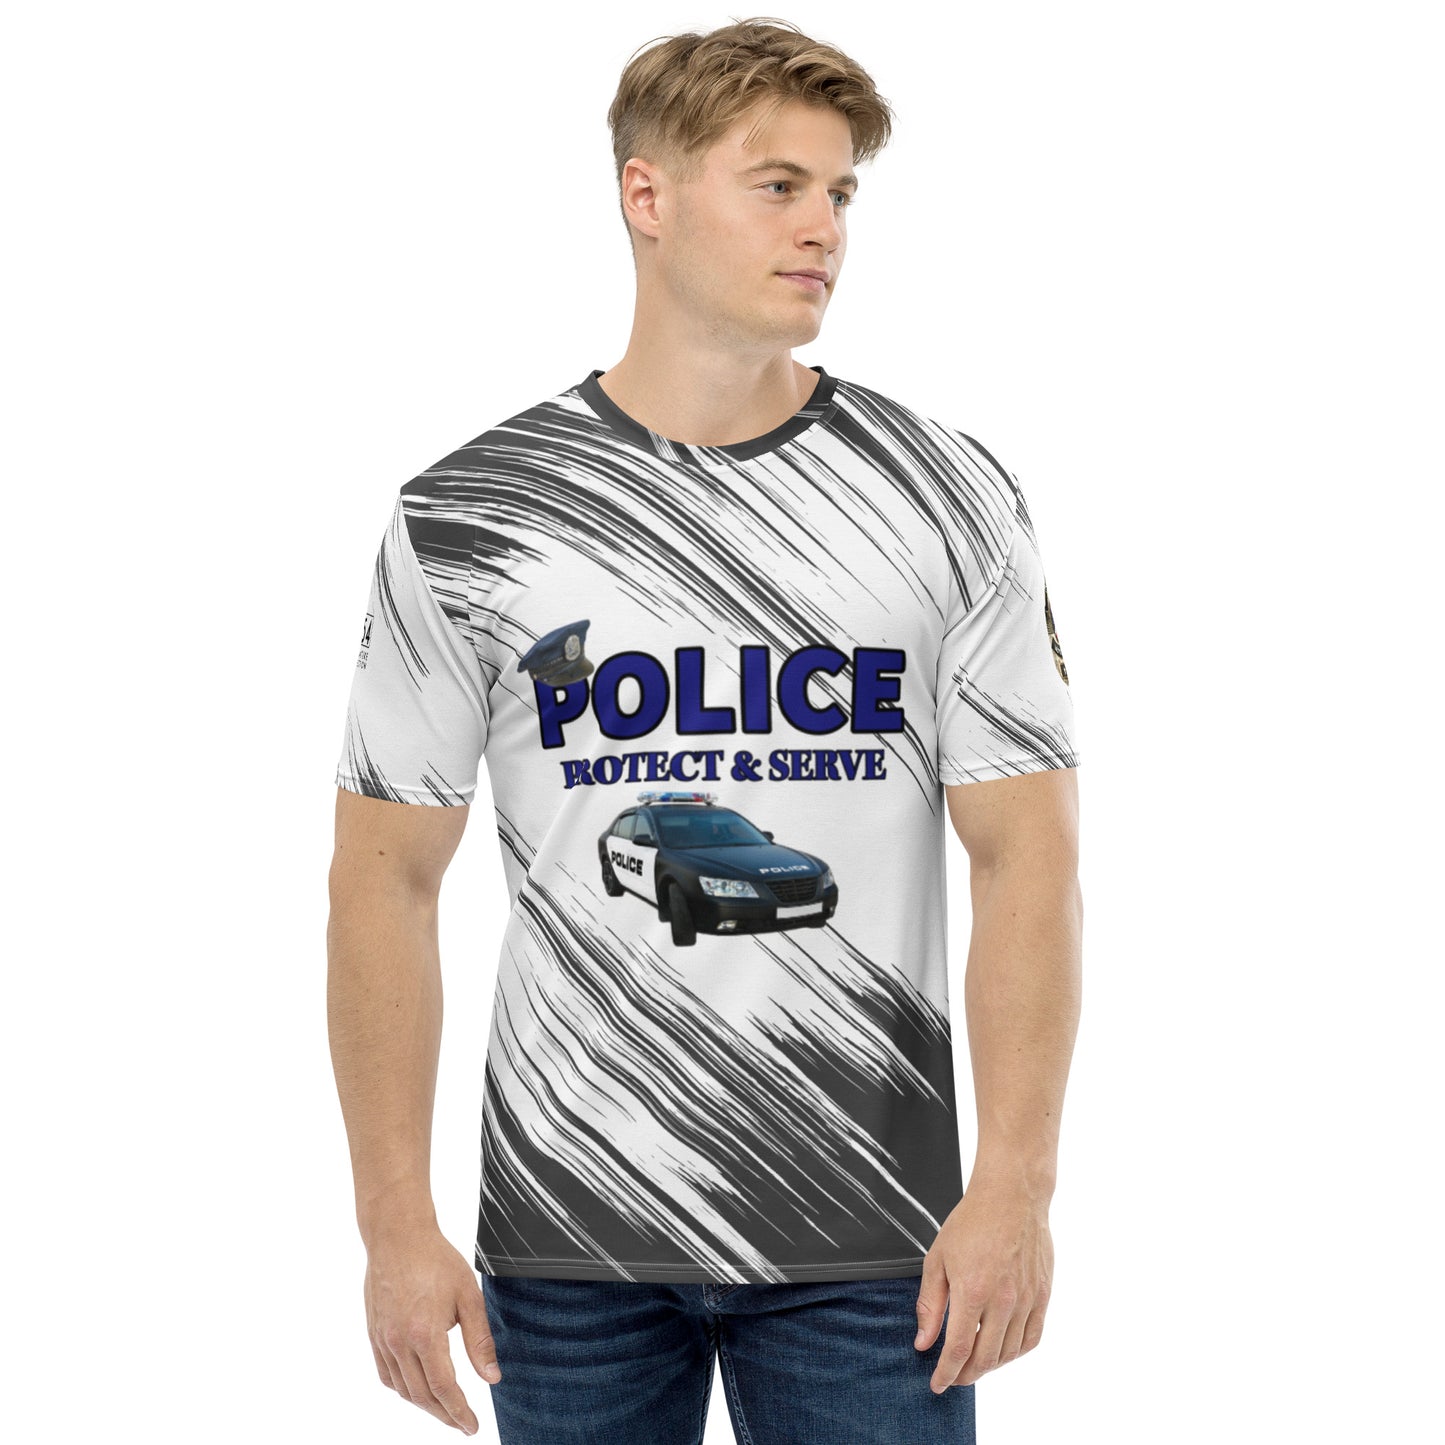 Protect & Serve 954 Men's t-shirt